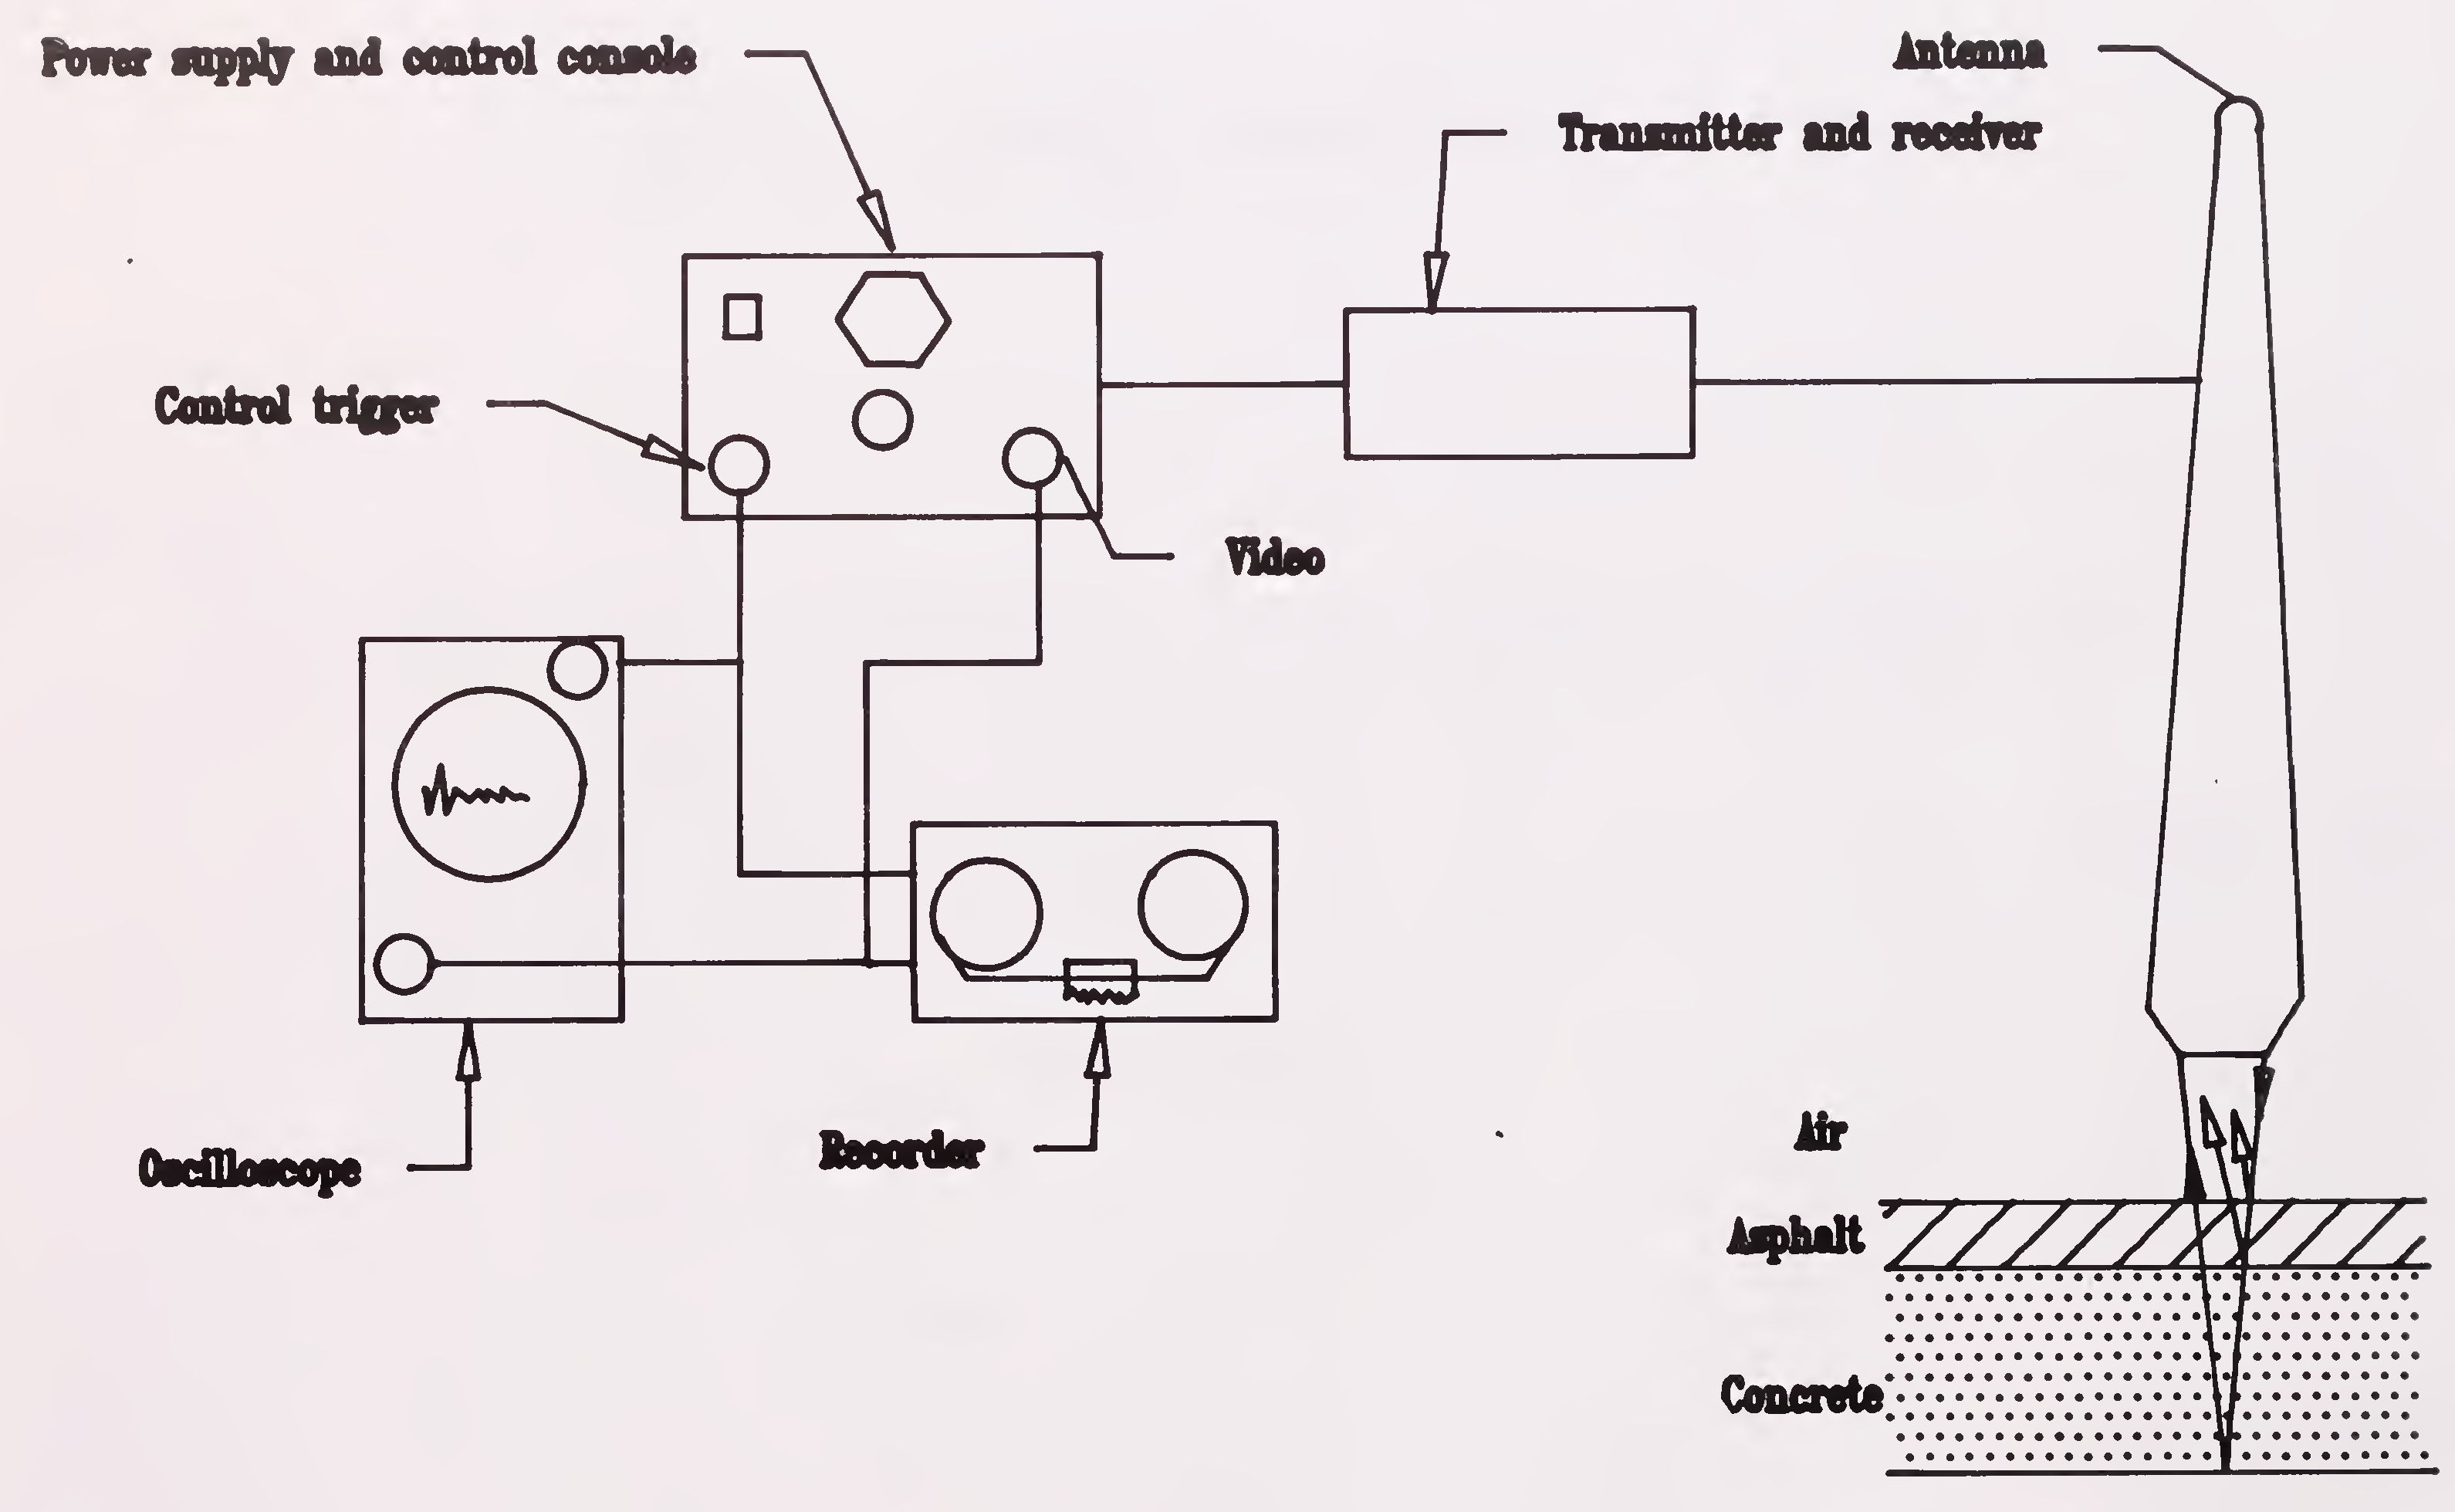 Fig.4.2 ರಾಡಾರ್ ವ್ಯವಸ್ಥೆಯ ಅಂಶಗಳು